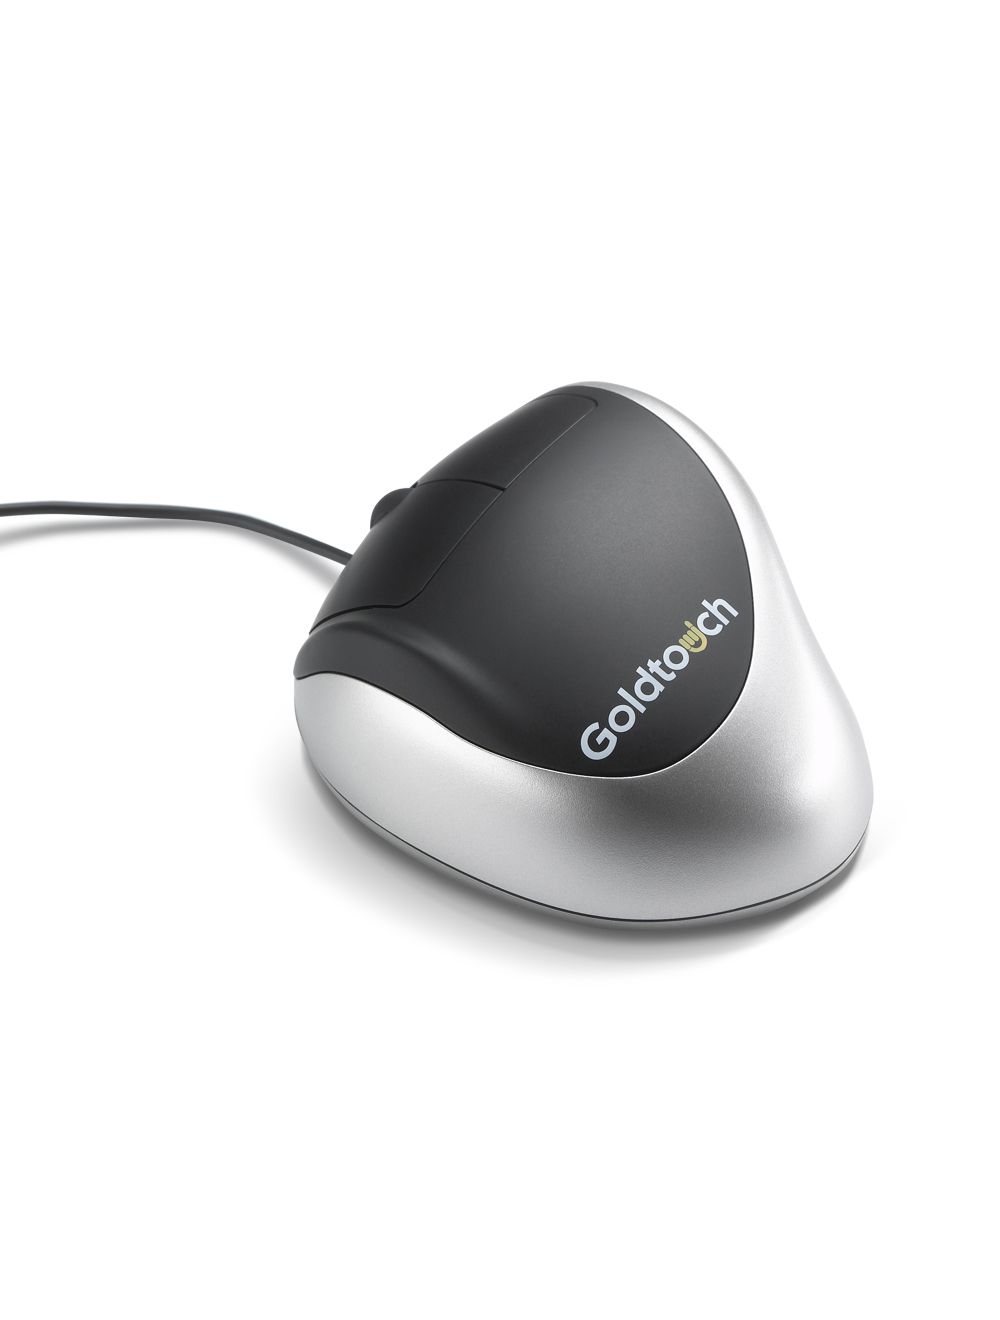 Goldtouch Comfort-fit™ Mouse v2.0 USB